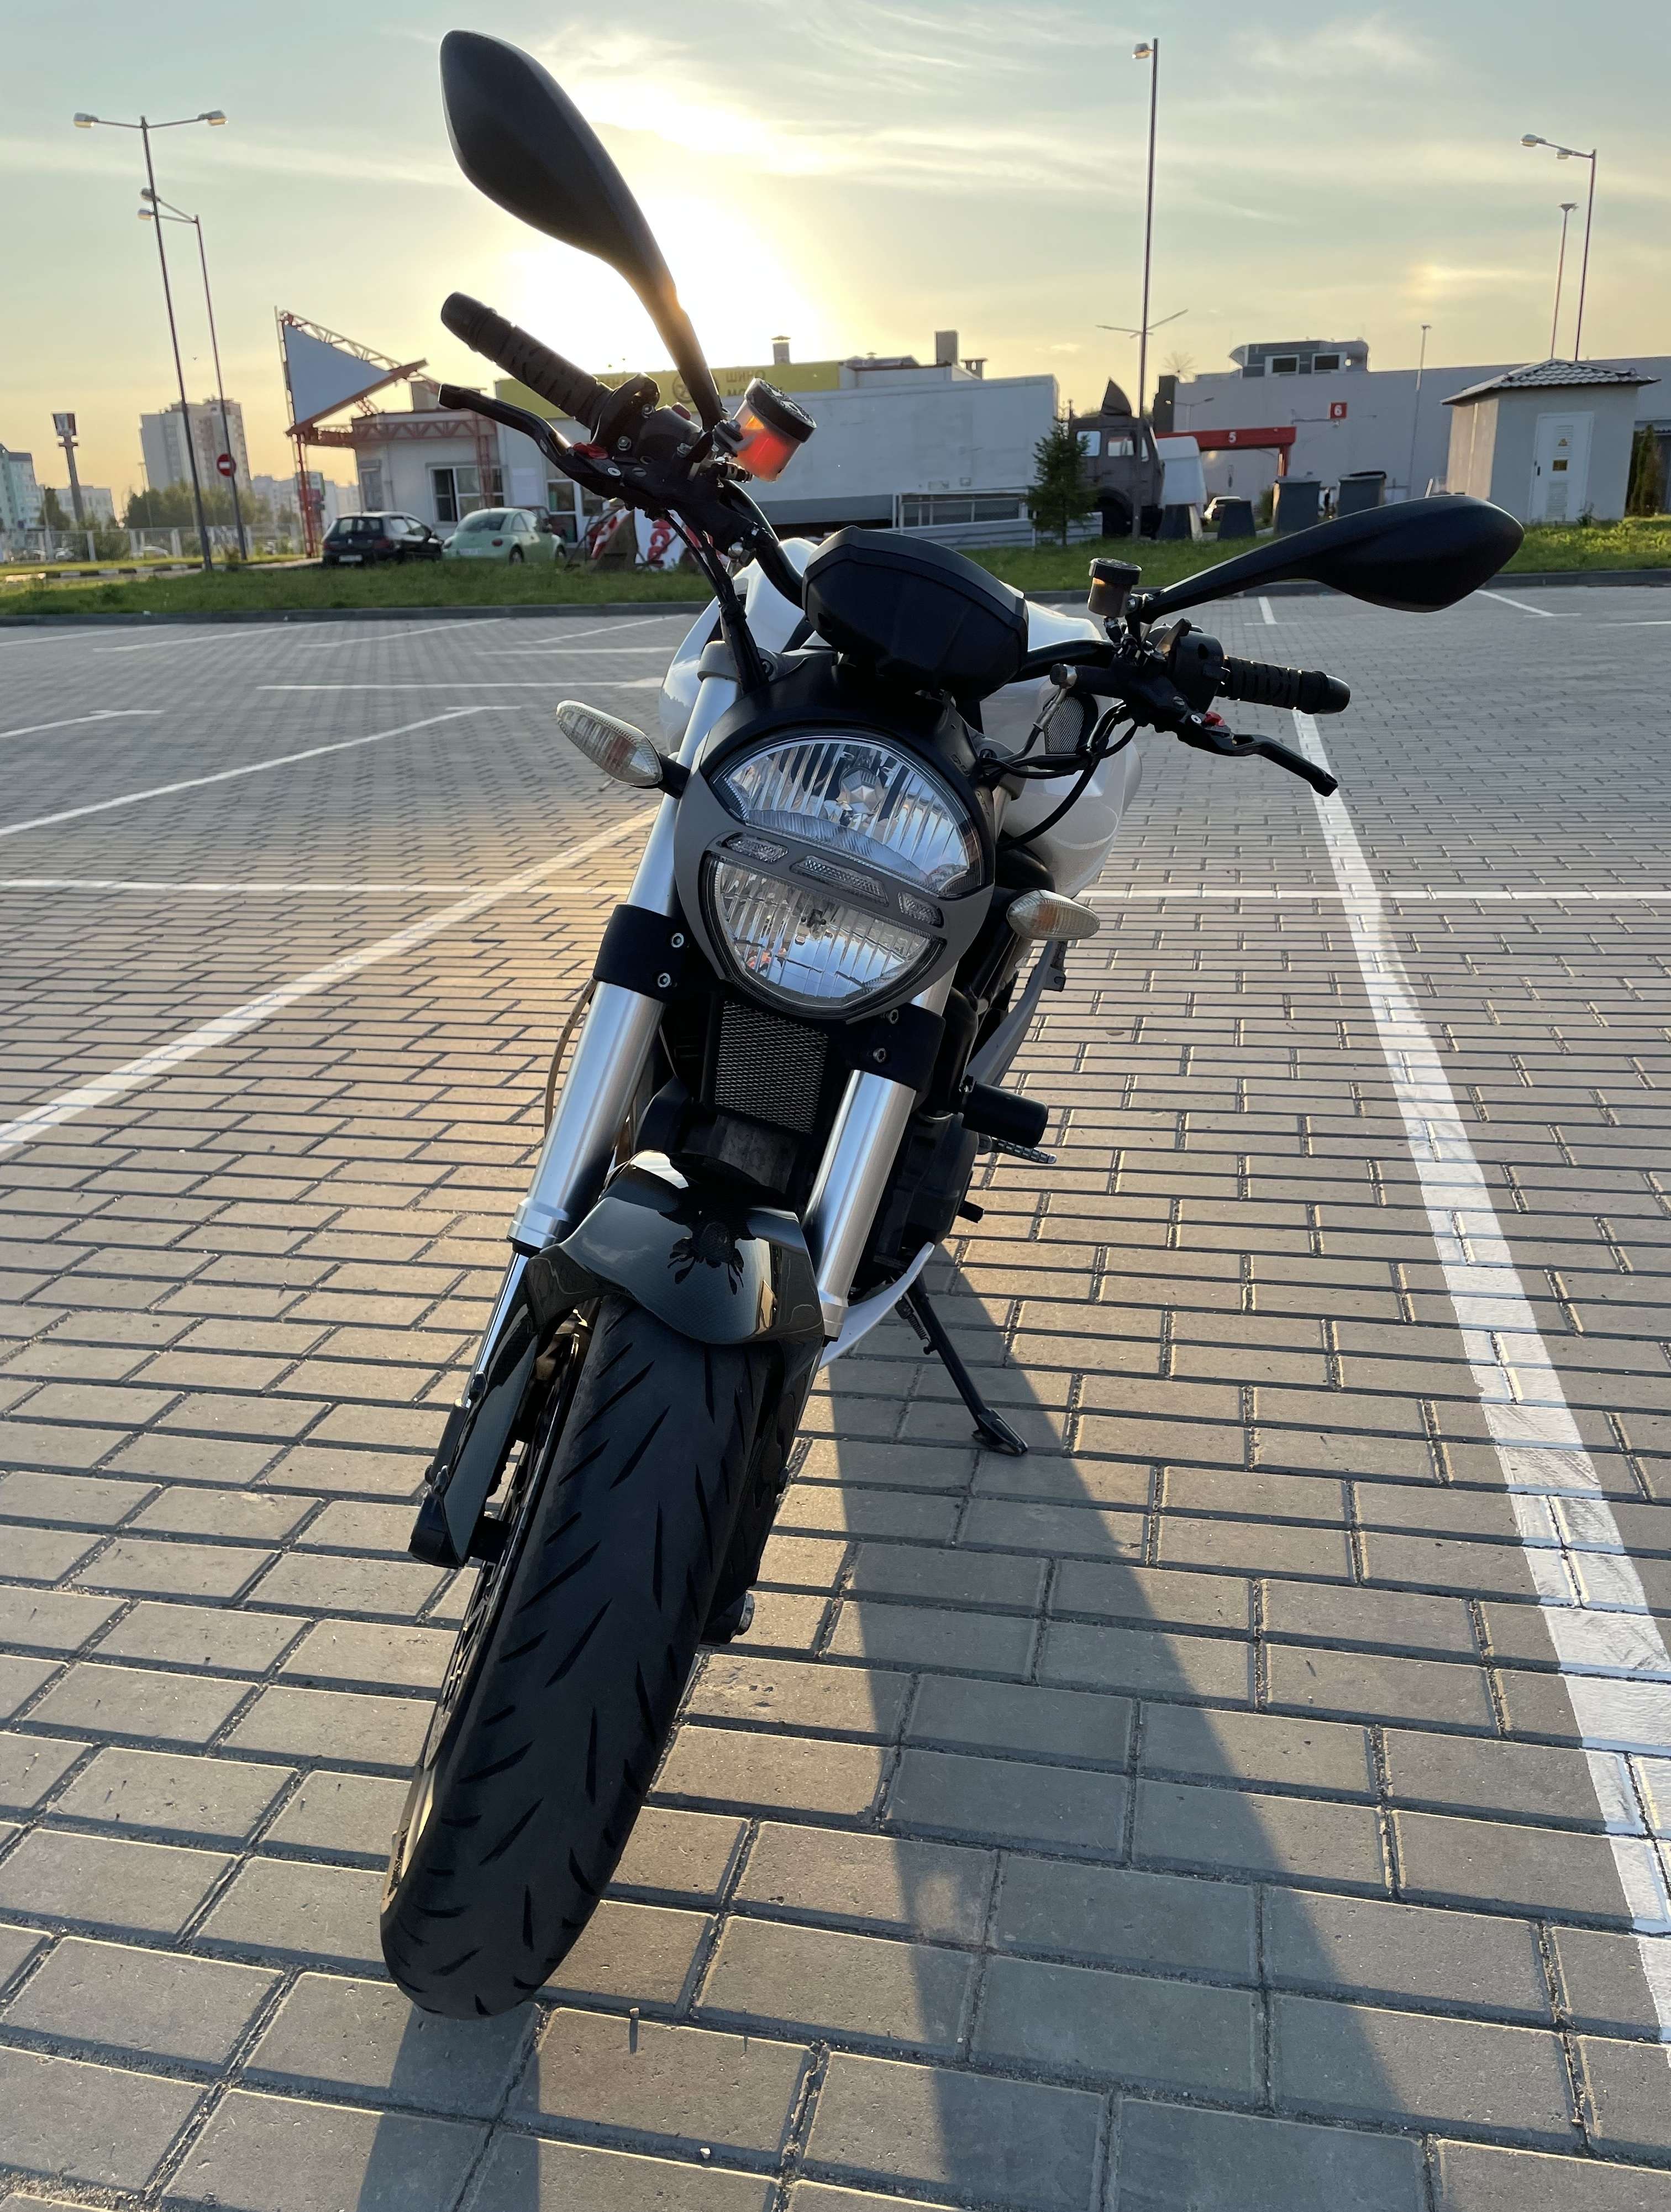 Купить мотоцикл Ducati в Беларуси в кредит - цены, характеристики, фото. 